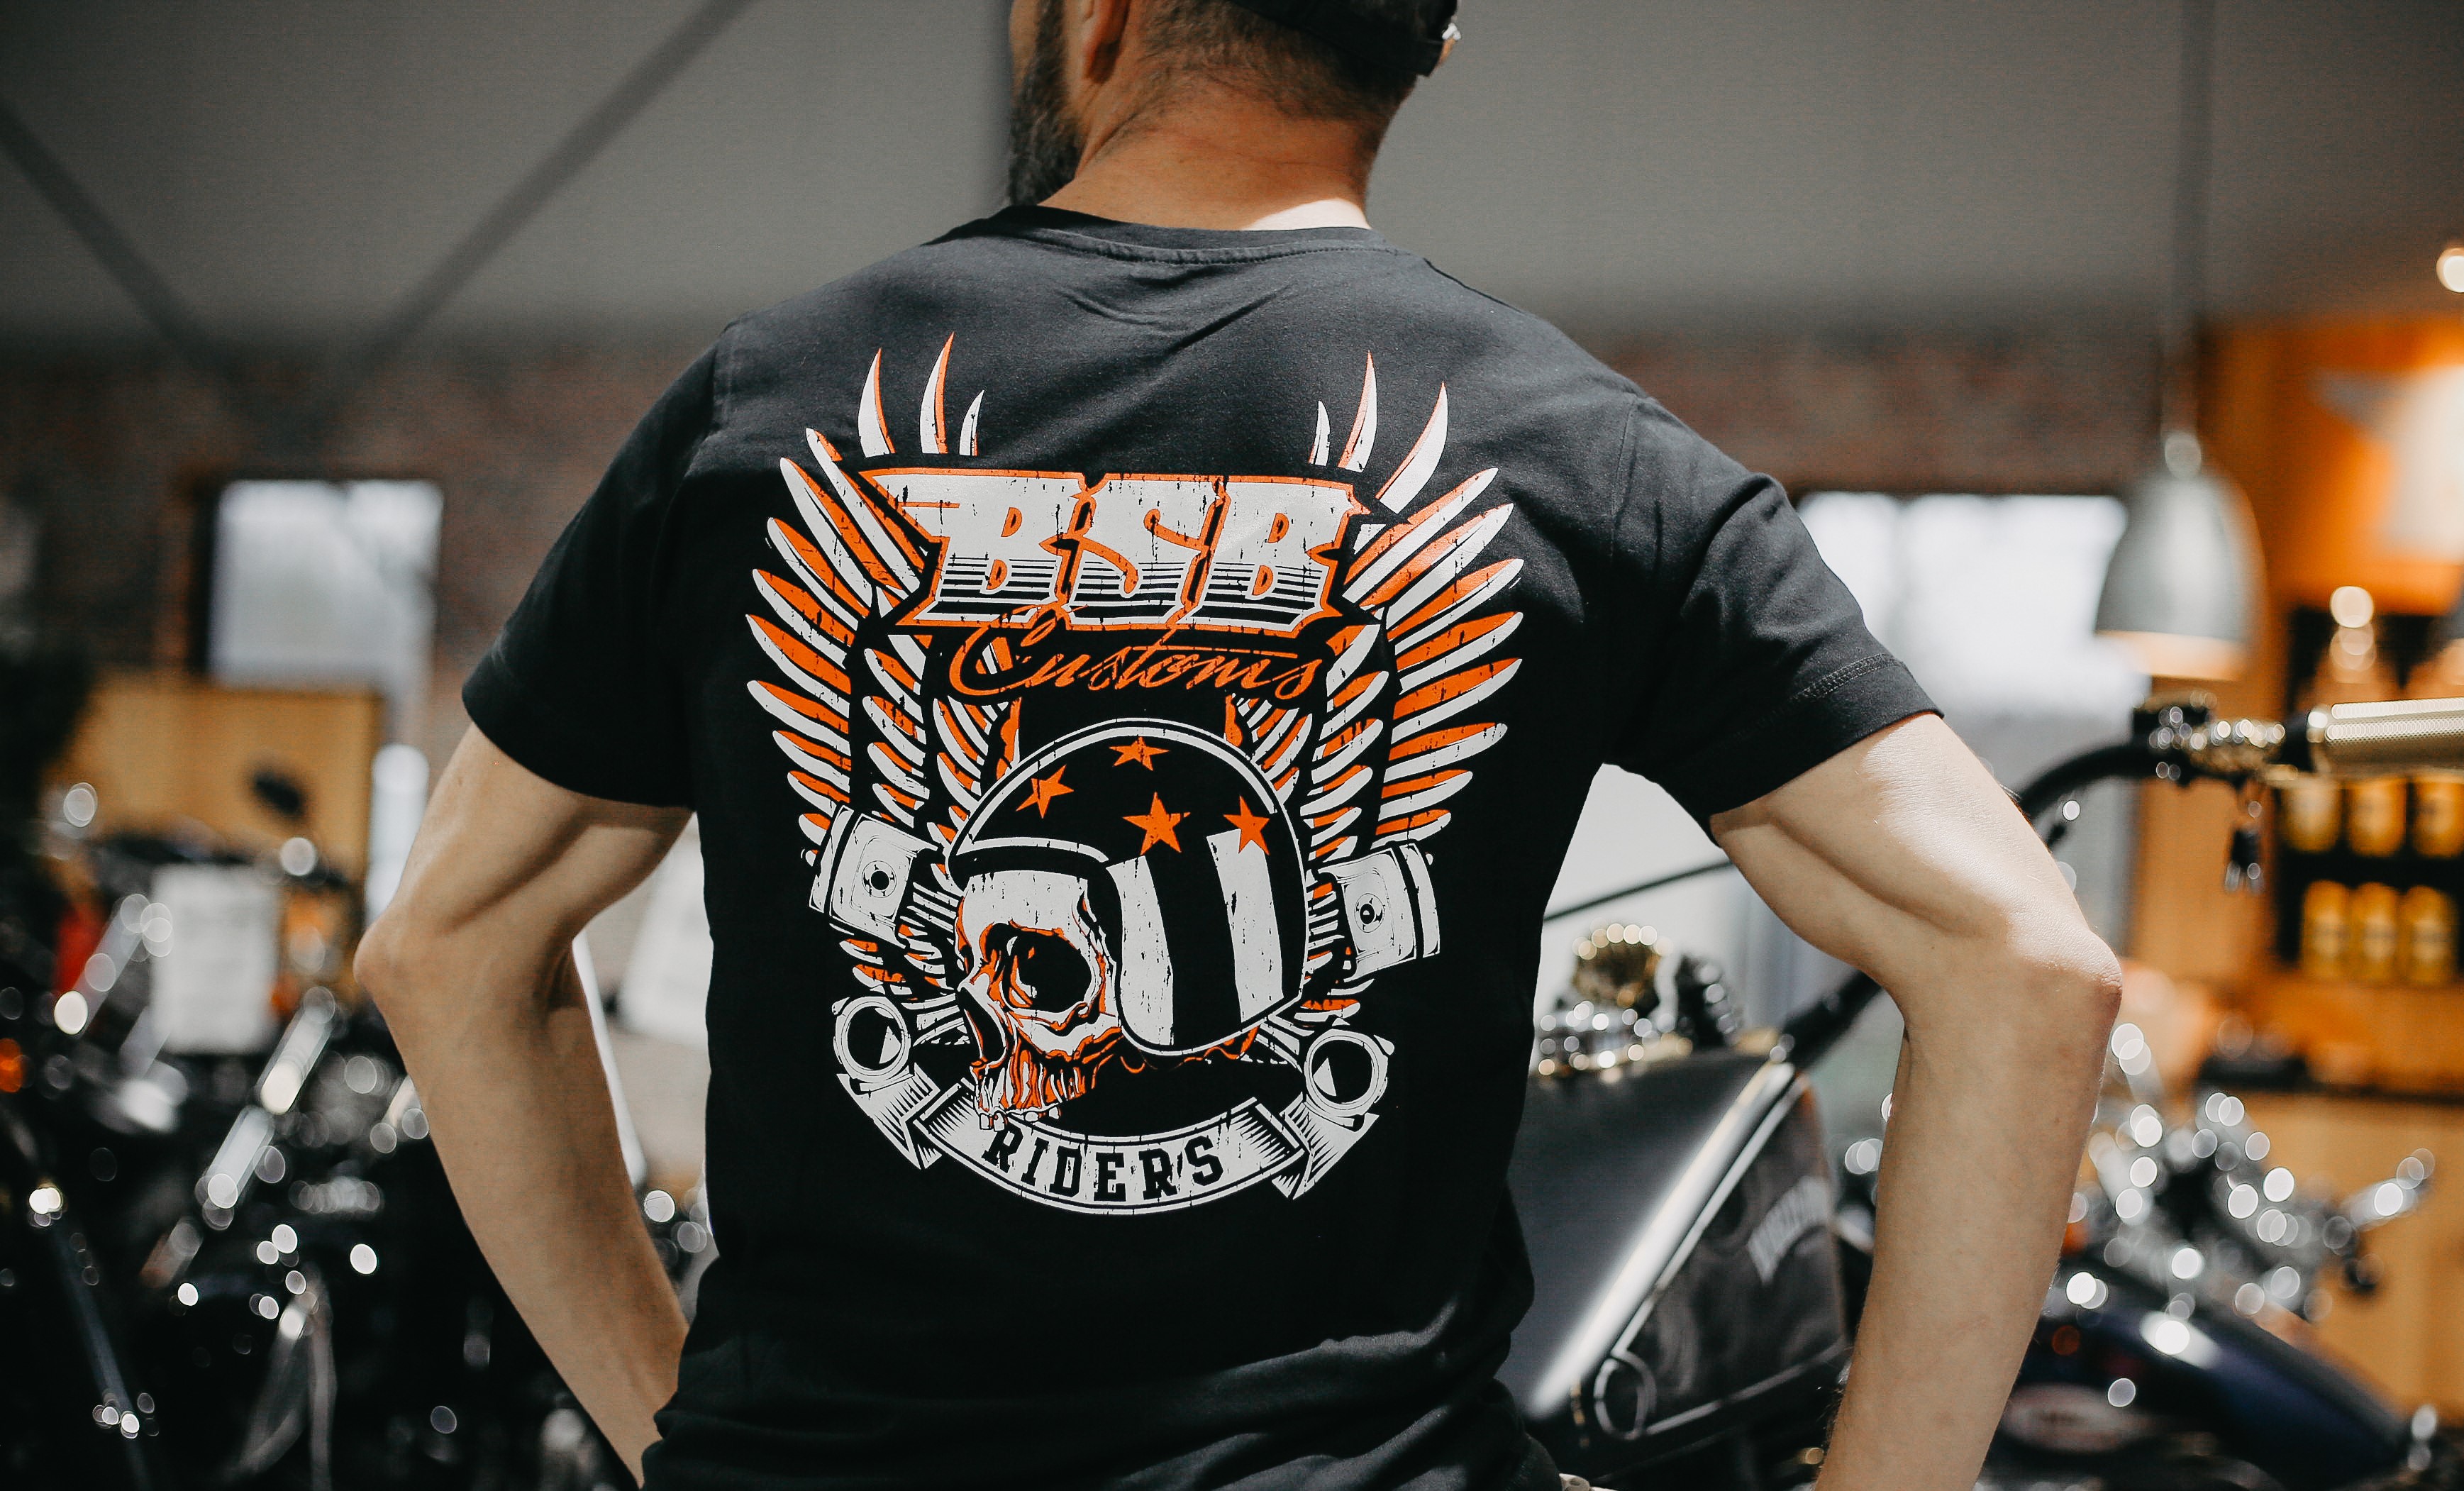 BSB Customs "Riders" T-Shirts Schwarz